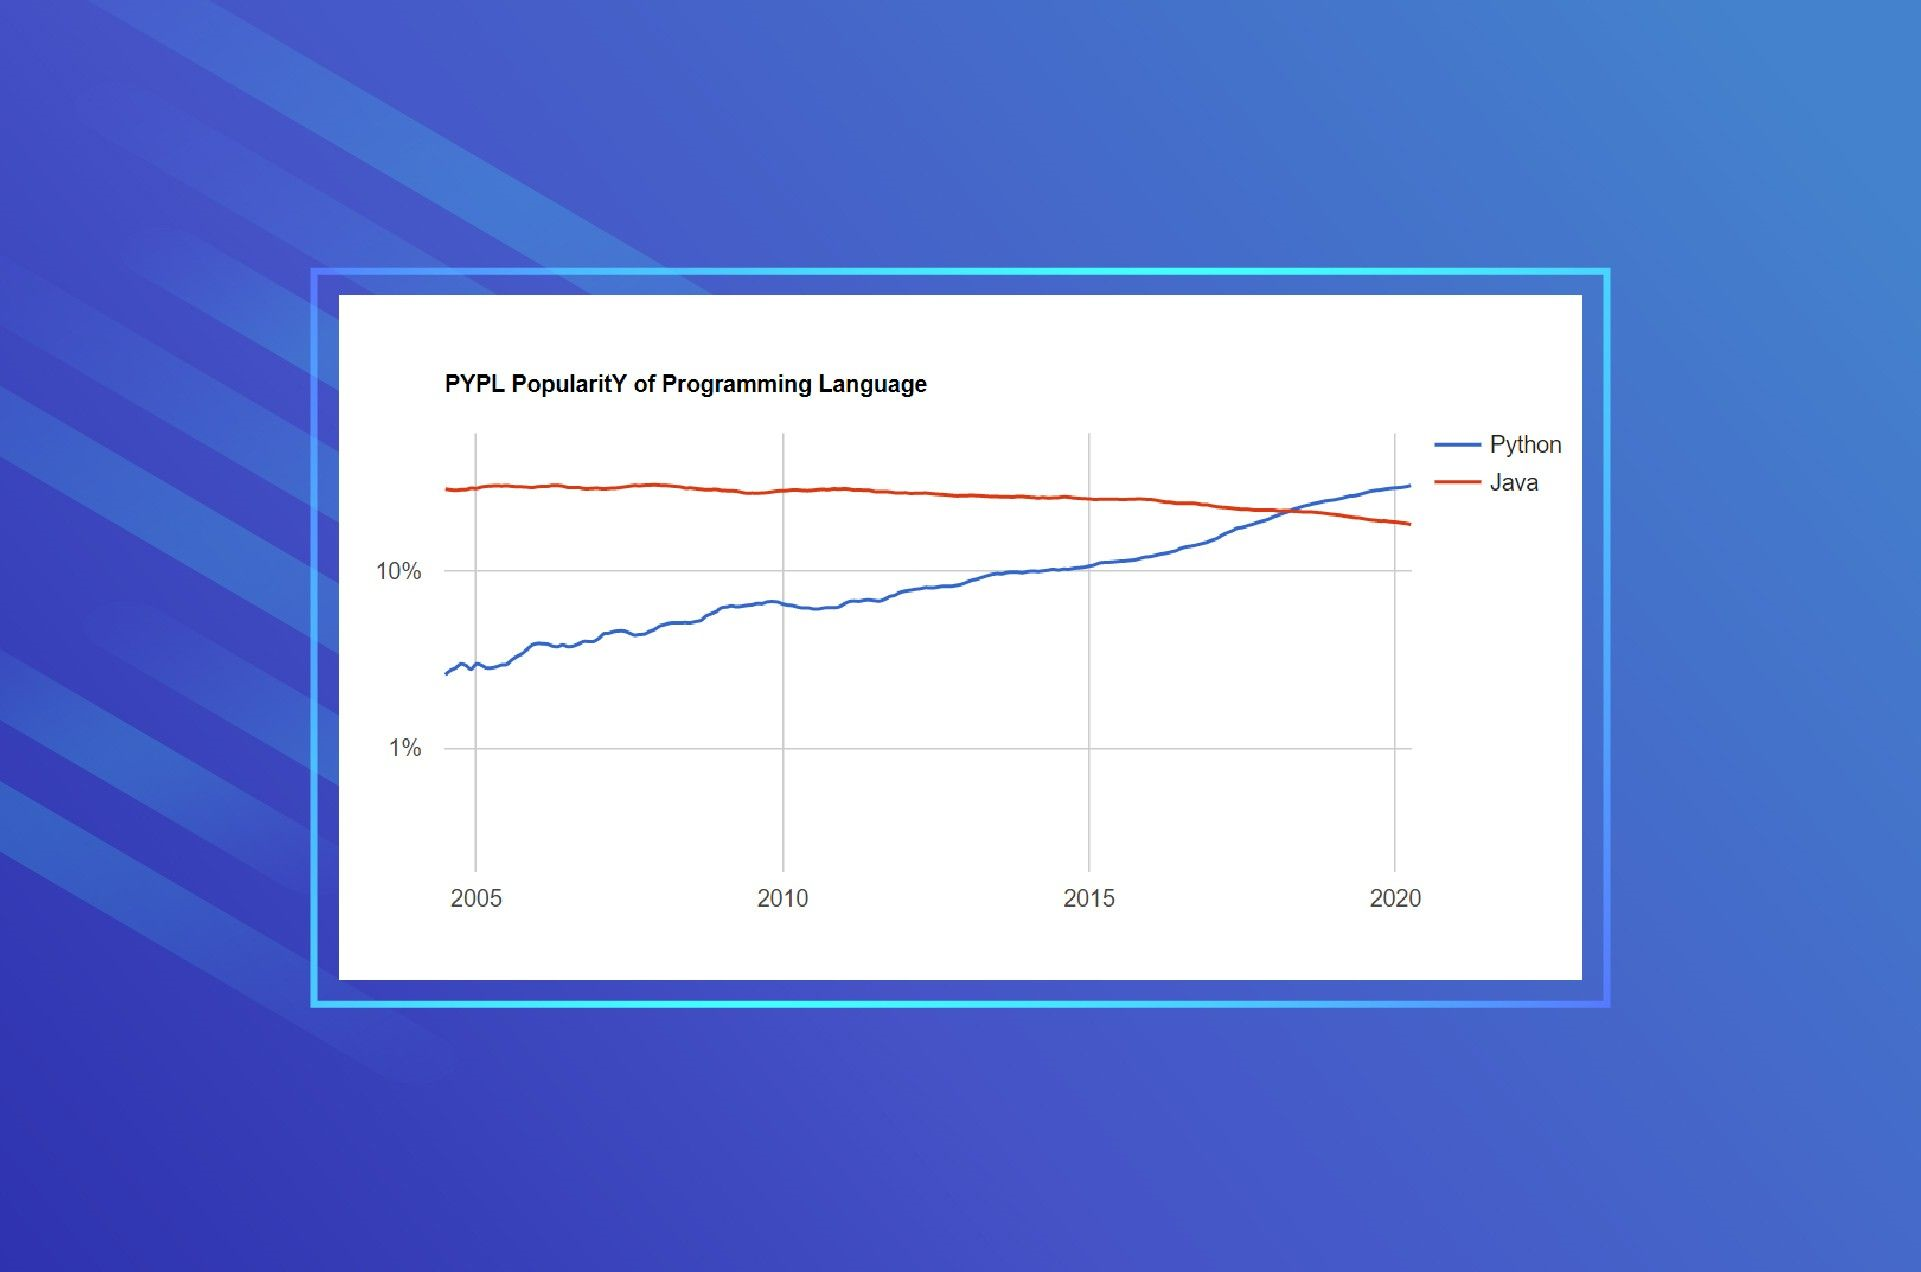 python popularity graph over java